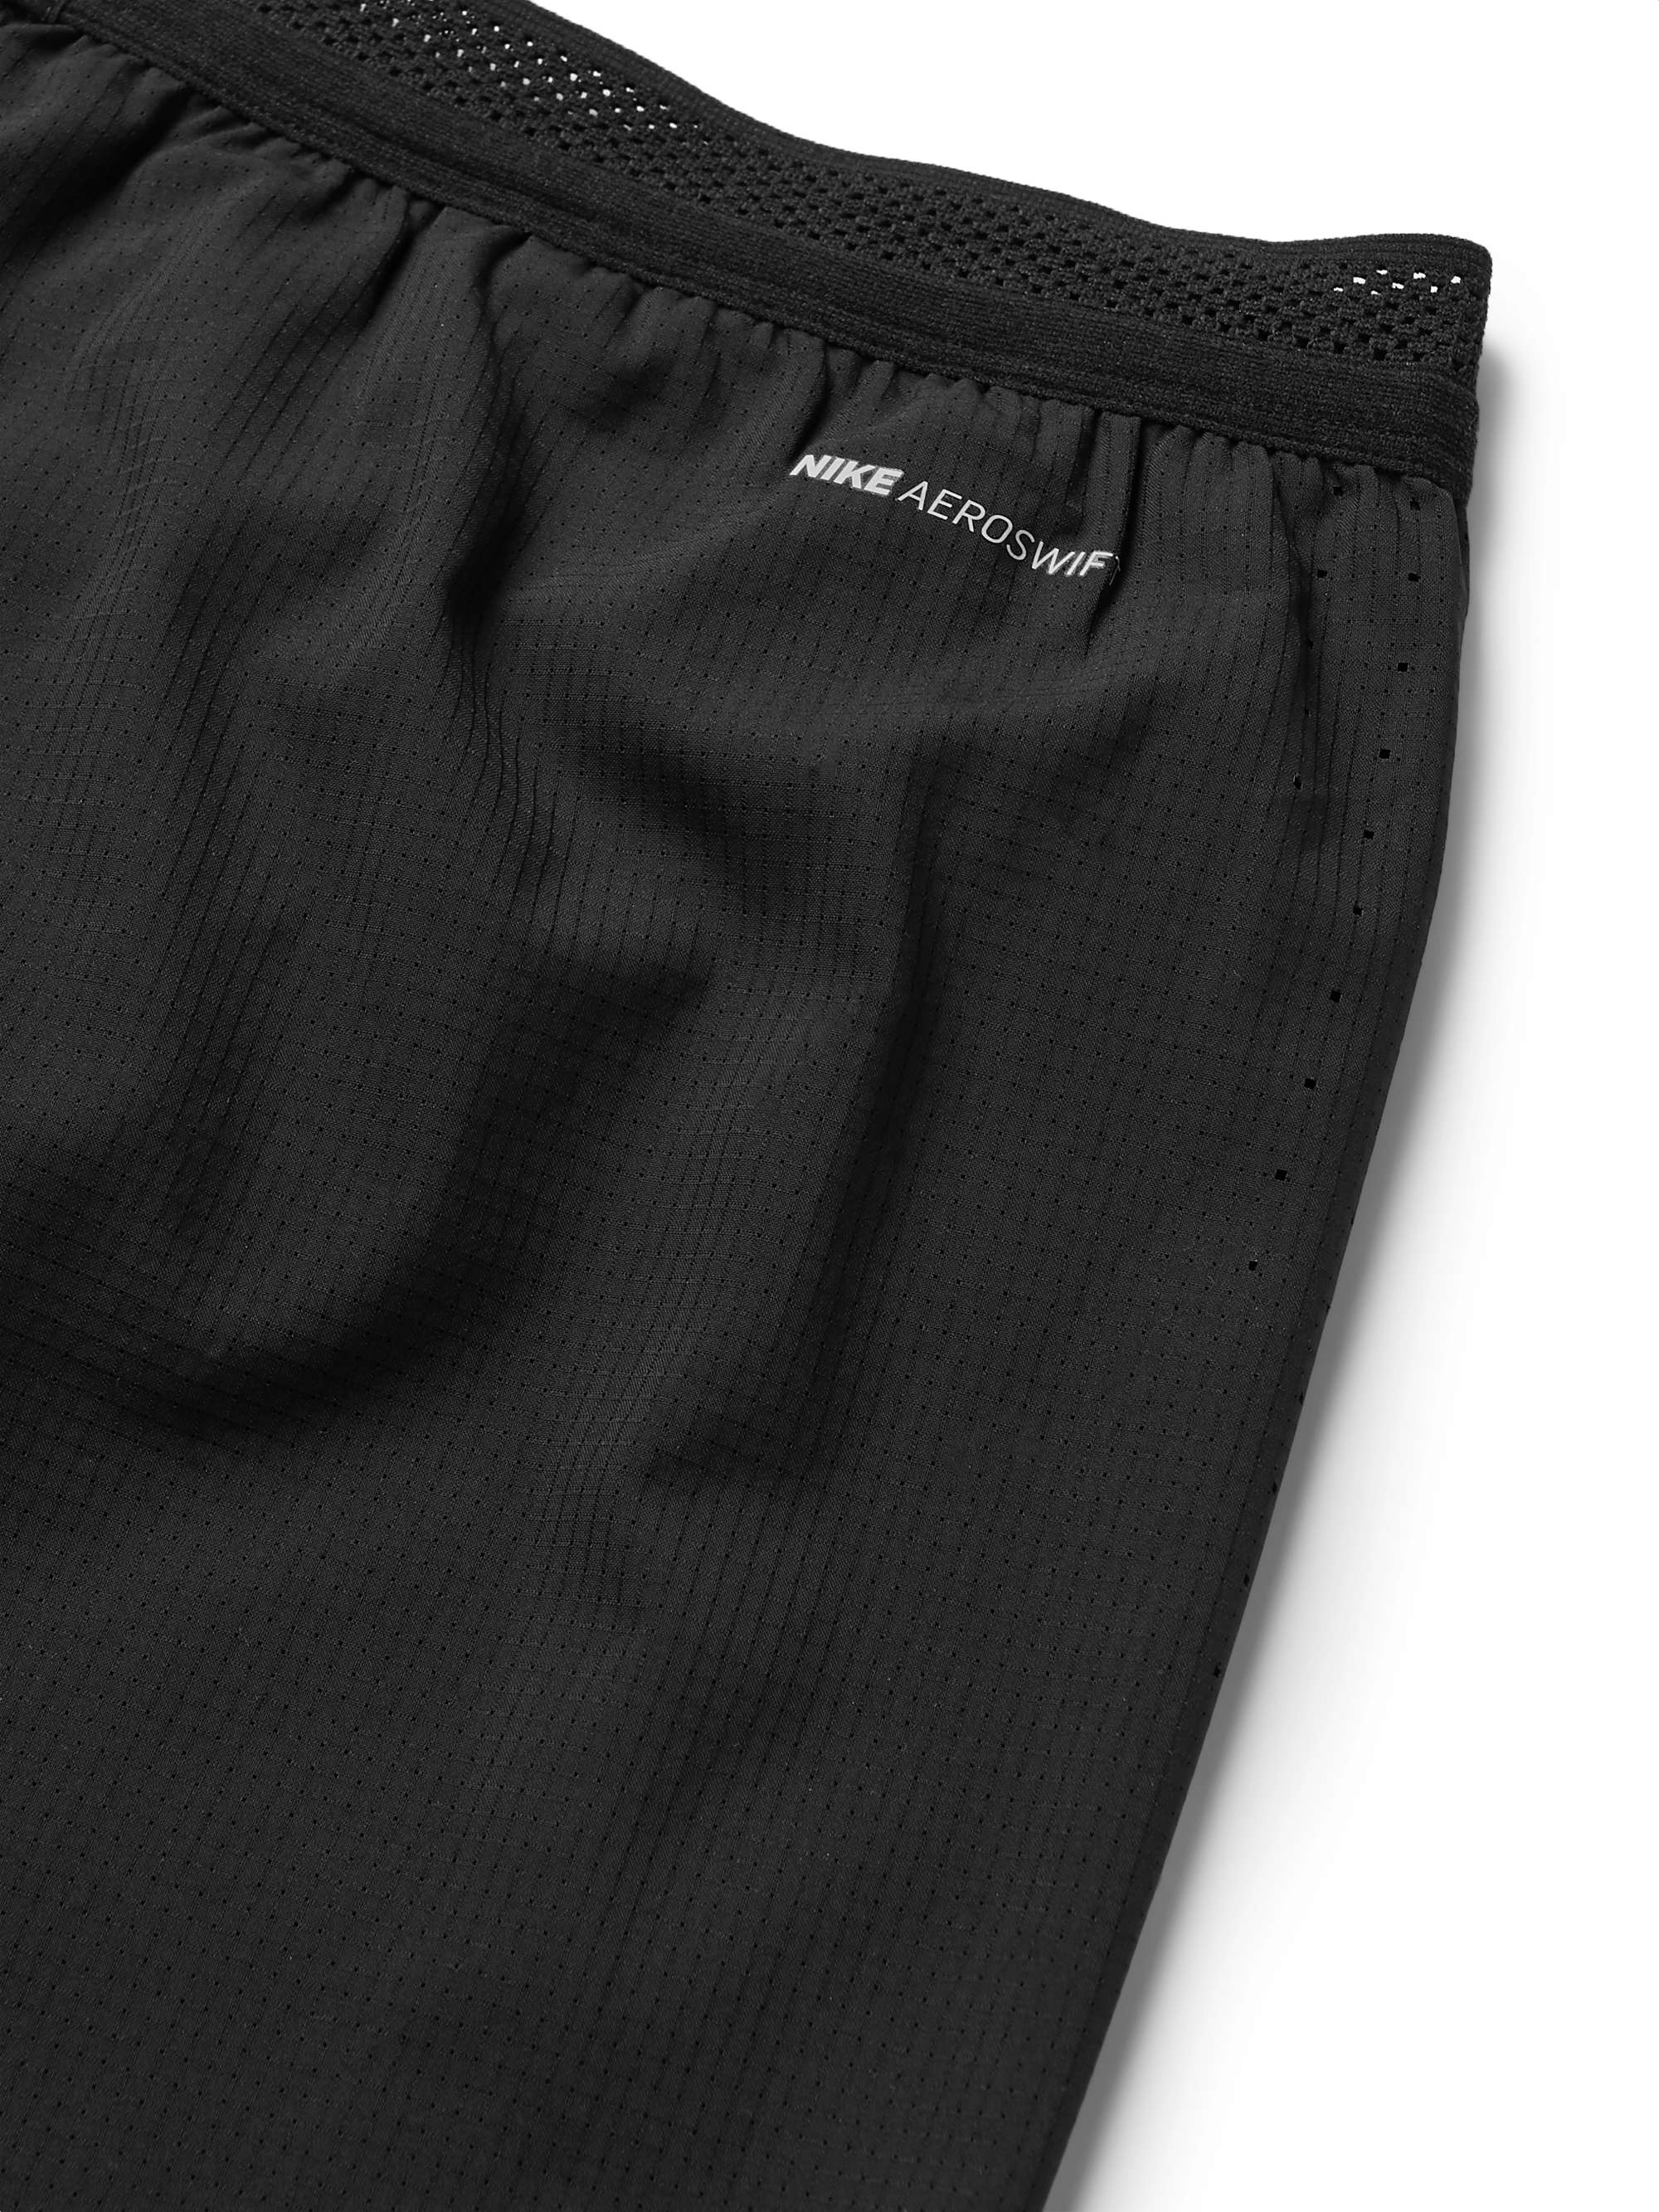 NIKE RUNNING AeroSwift Logo-Print Perforated Shell Running Shorts